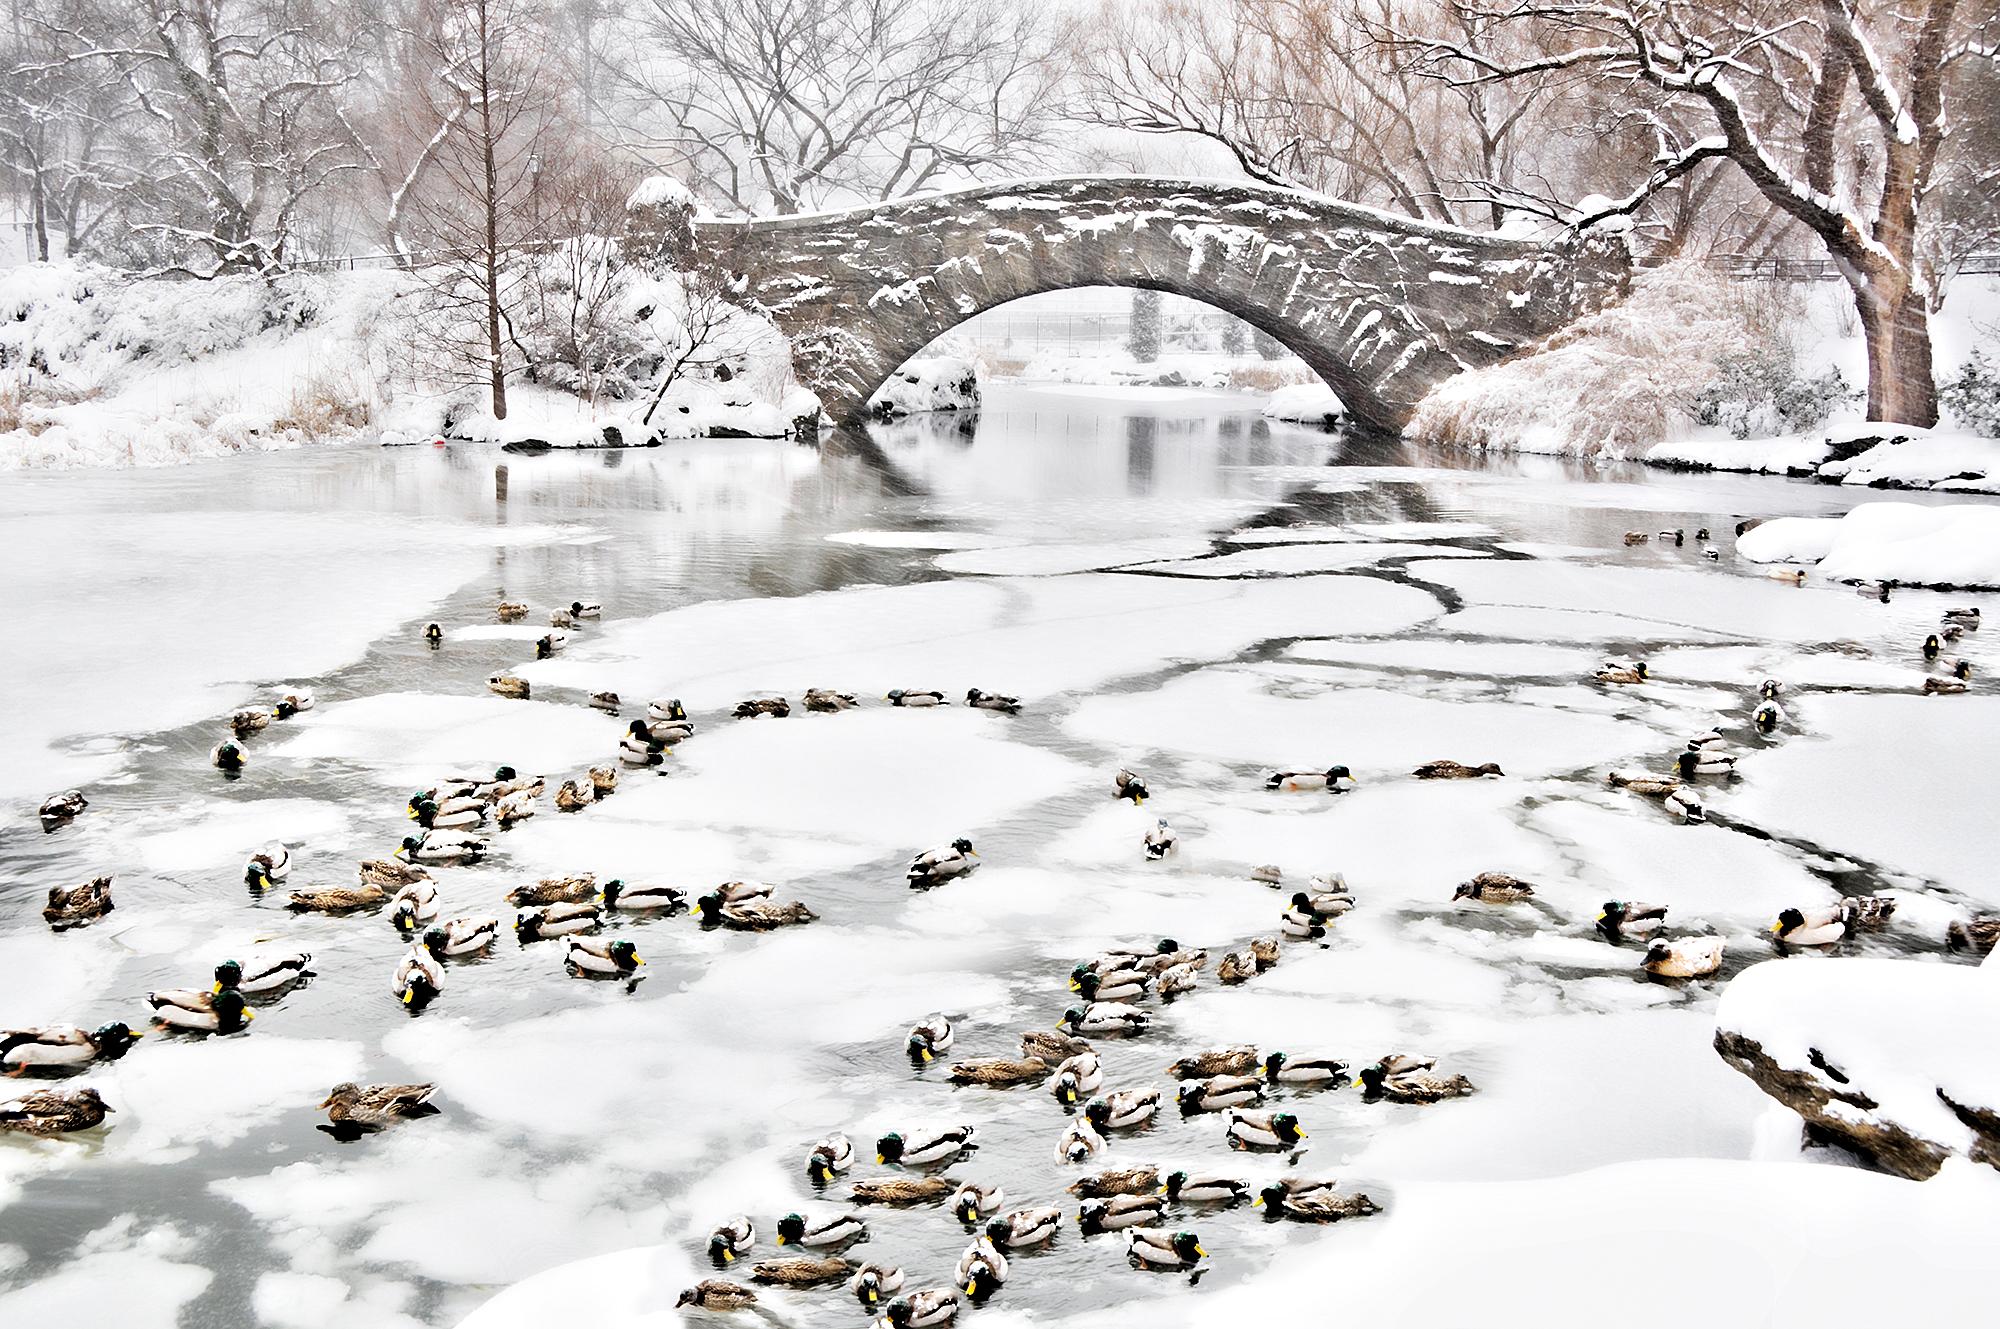 Mitchell Funk Landscape Photograph - Ducks In Frozen Pond In Snowy Central Park, New York City